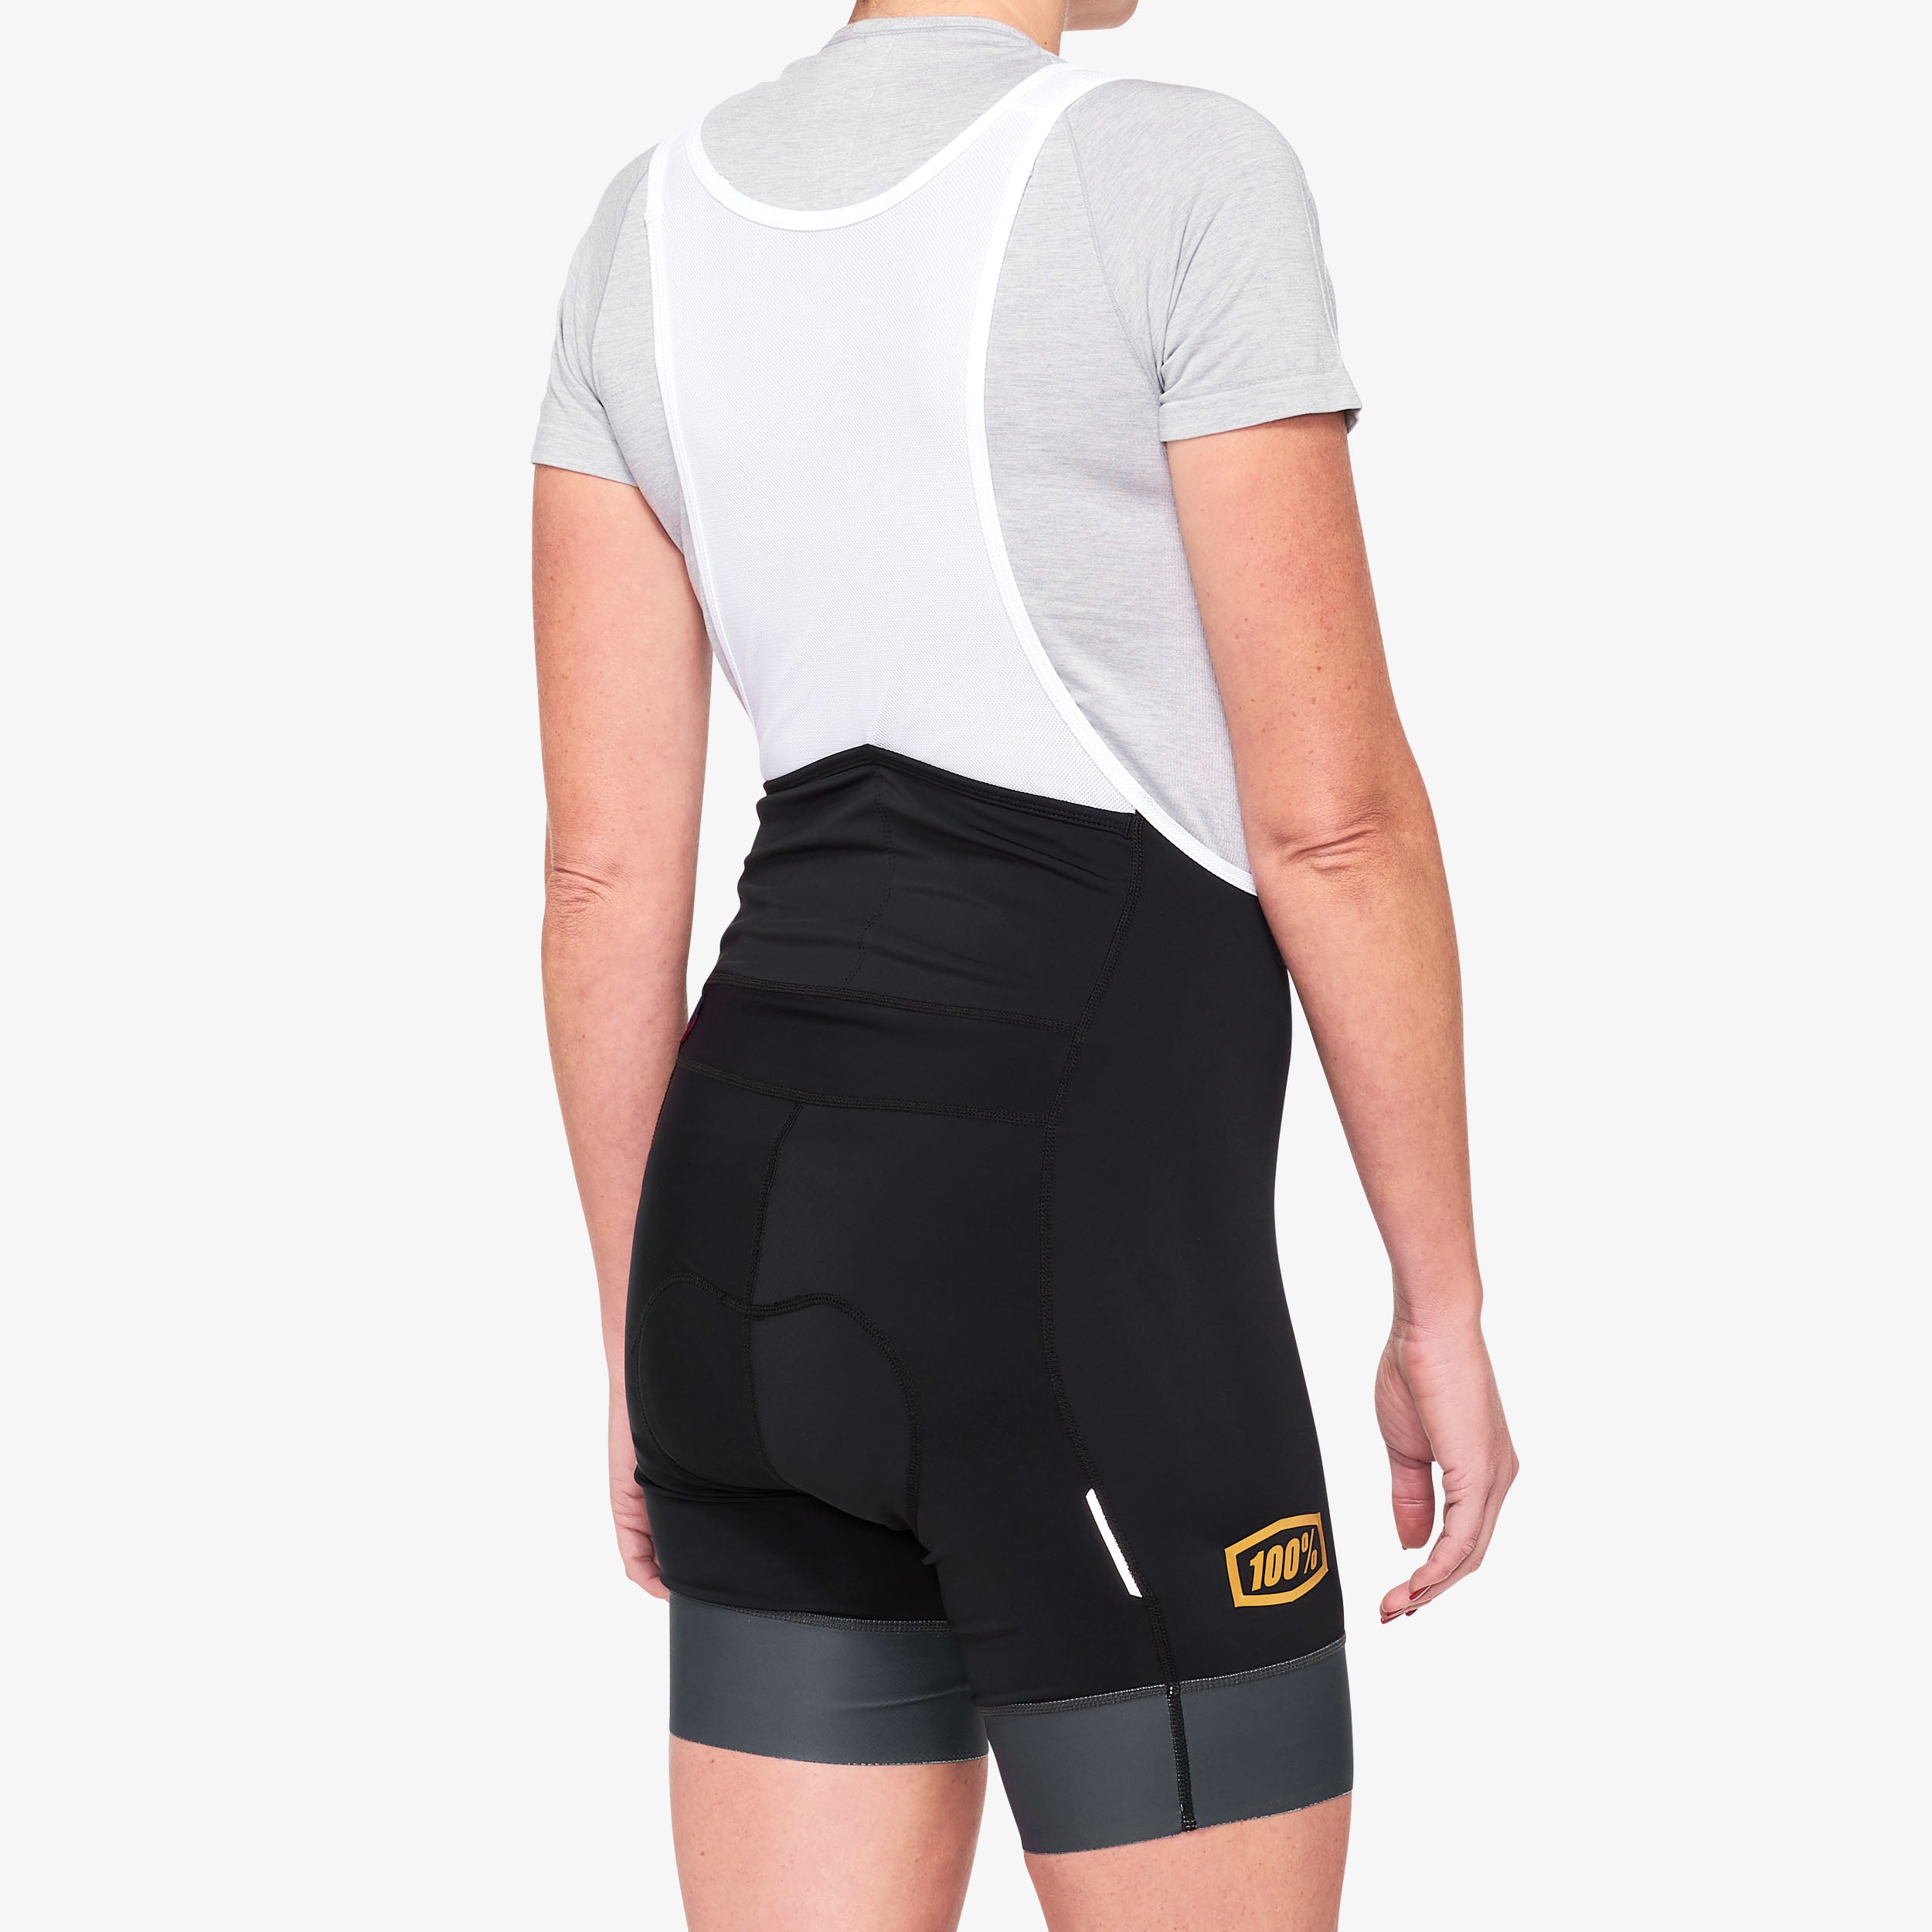 EXCEEDA Women's Bib Shorts Black/Charcoal - Secondary